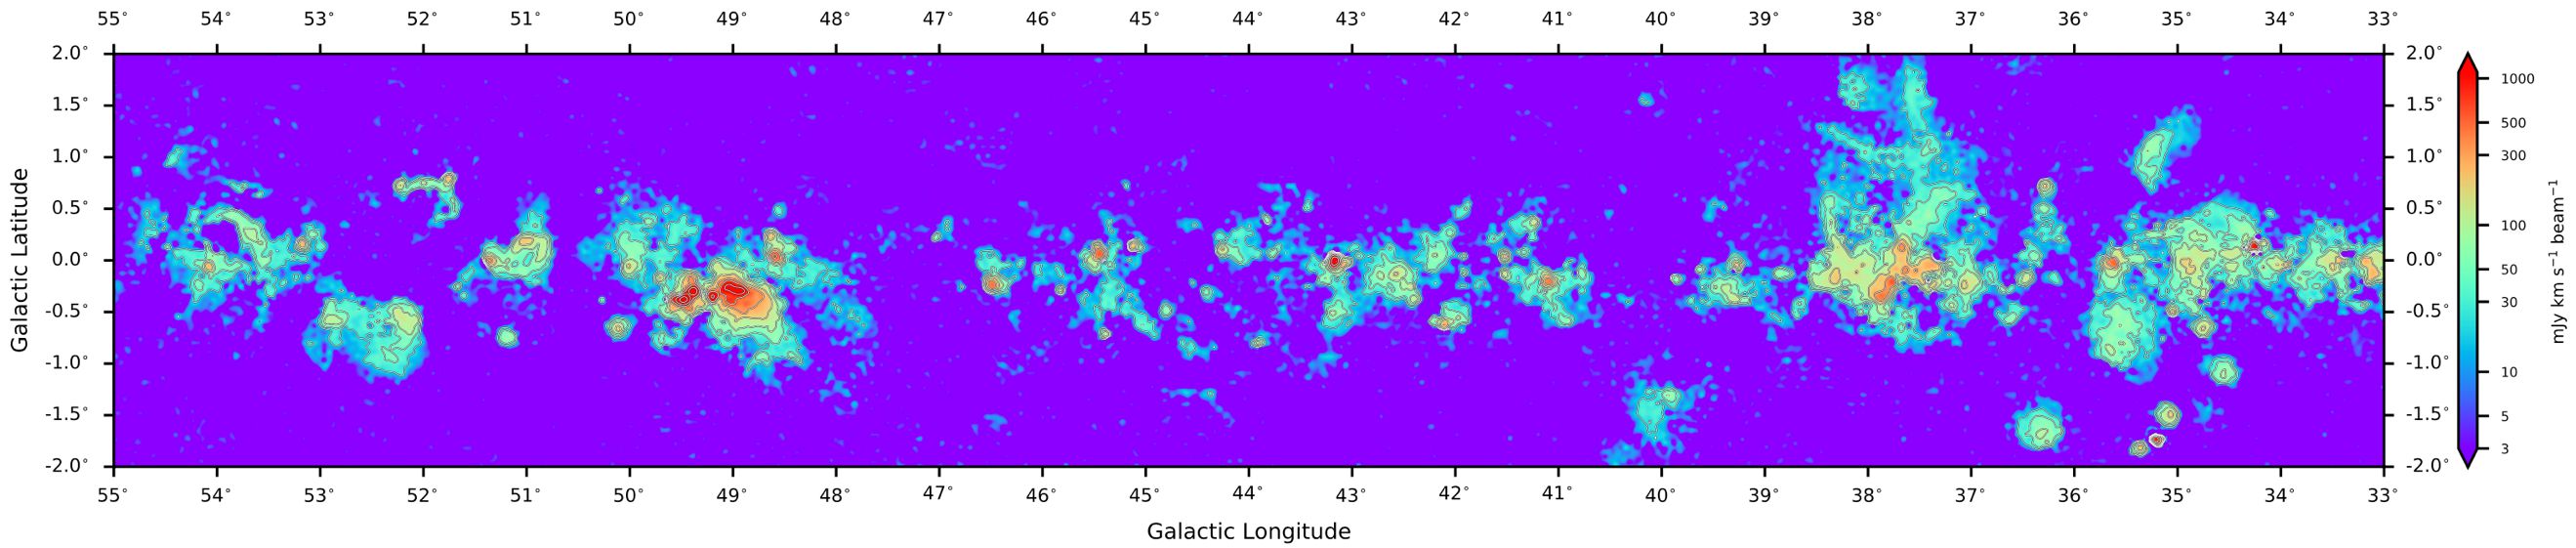 FAST揭示的银河系星际空间电离气体分布图(速度区间-40 km/s到 120 km/s的累积)